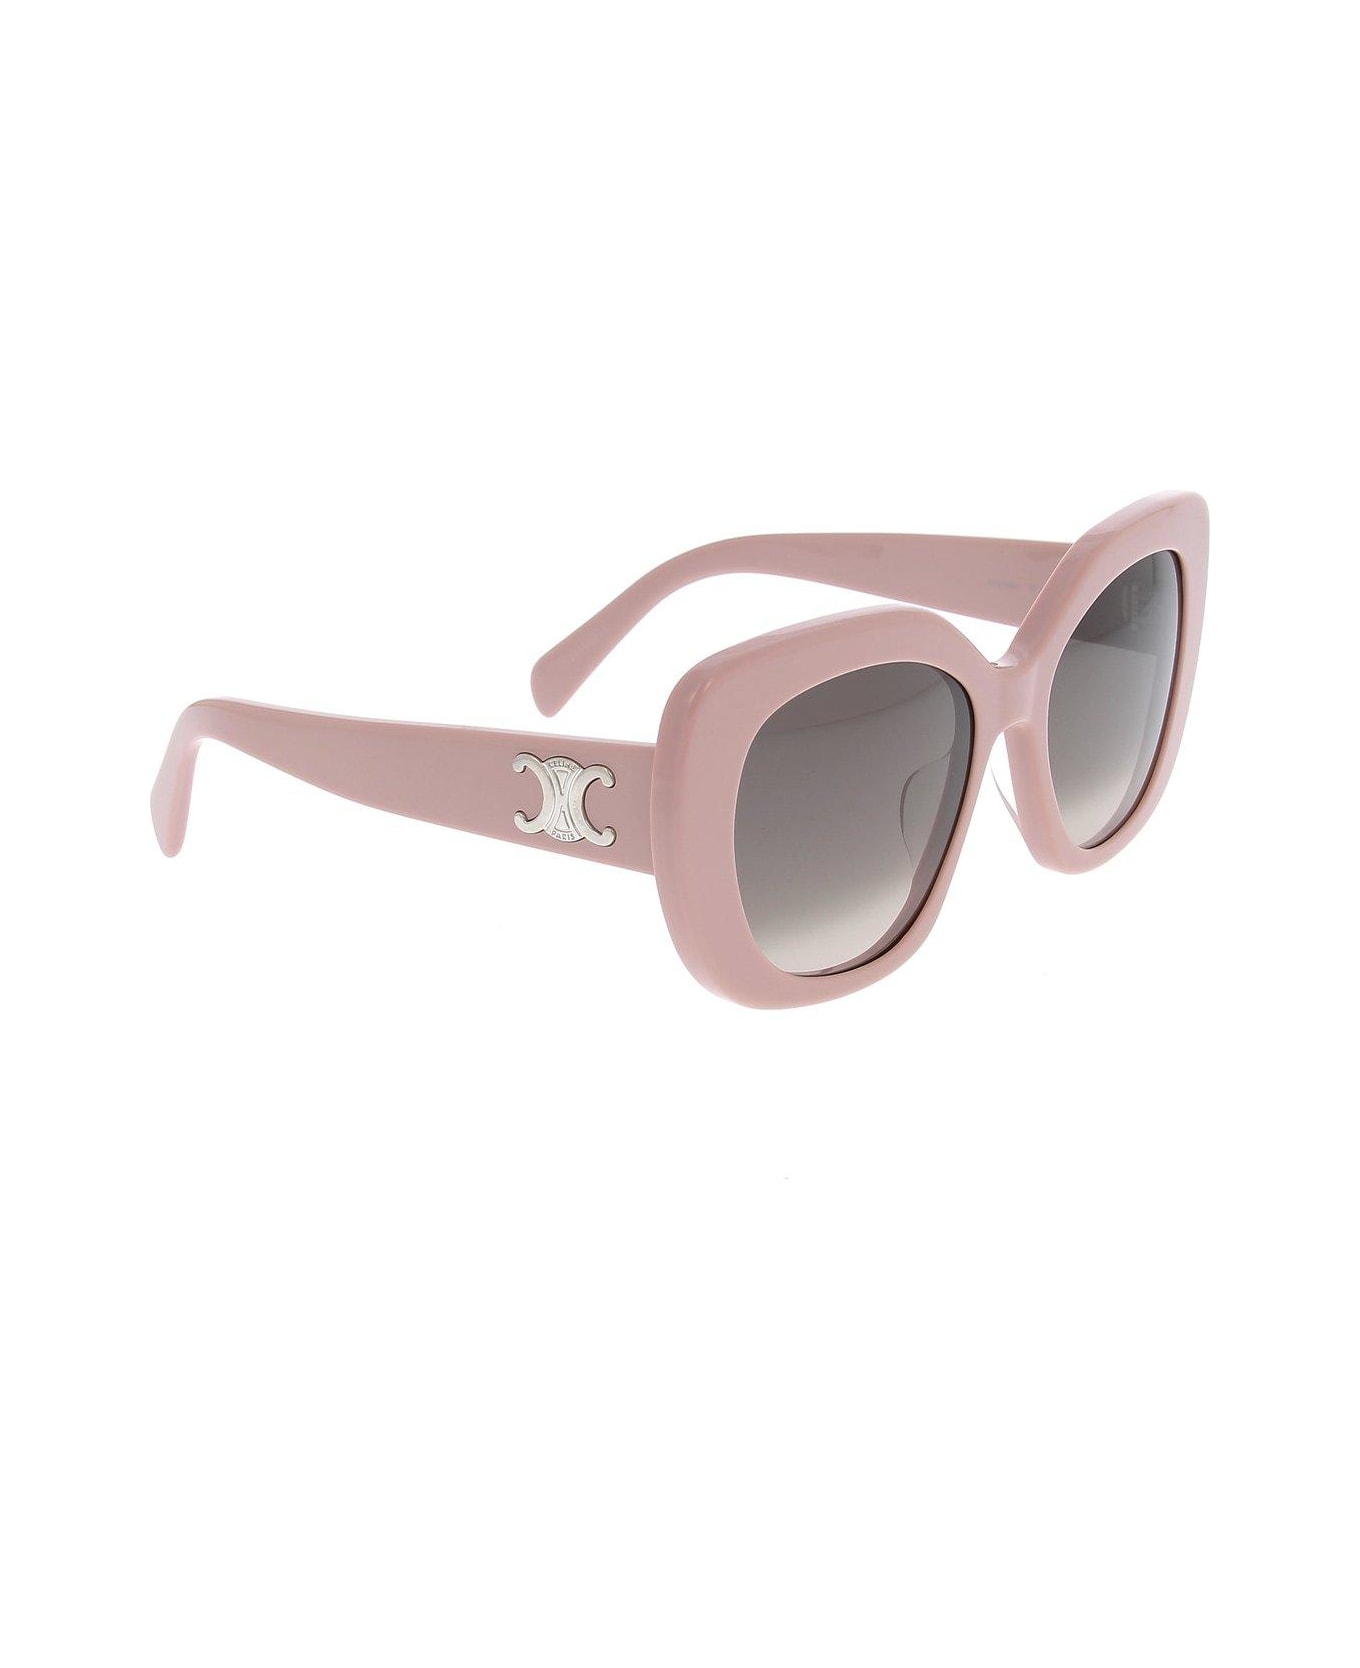 Celine Butterfly Frame Sunglasses - 72f サングラス